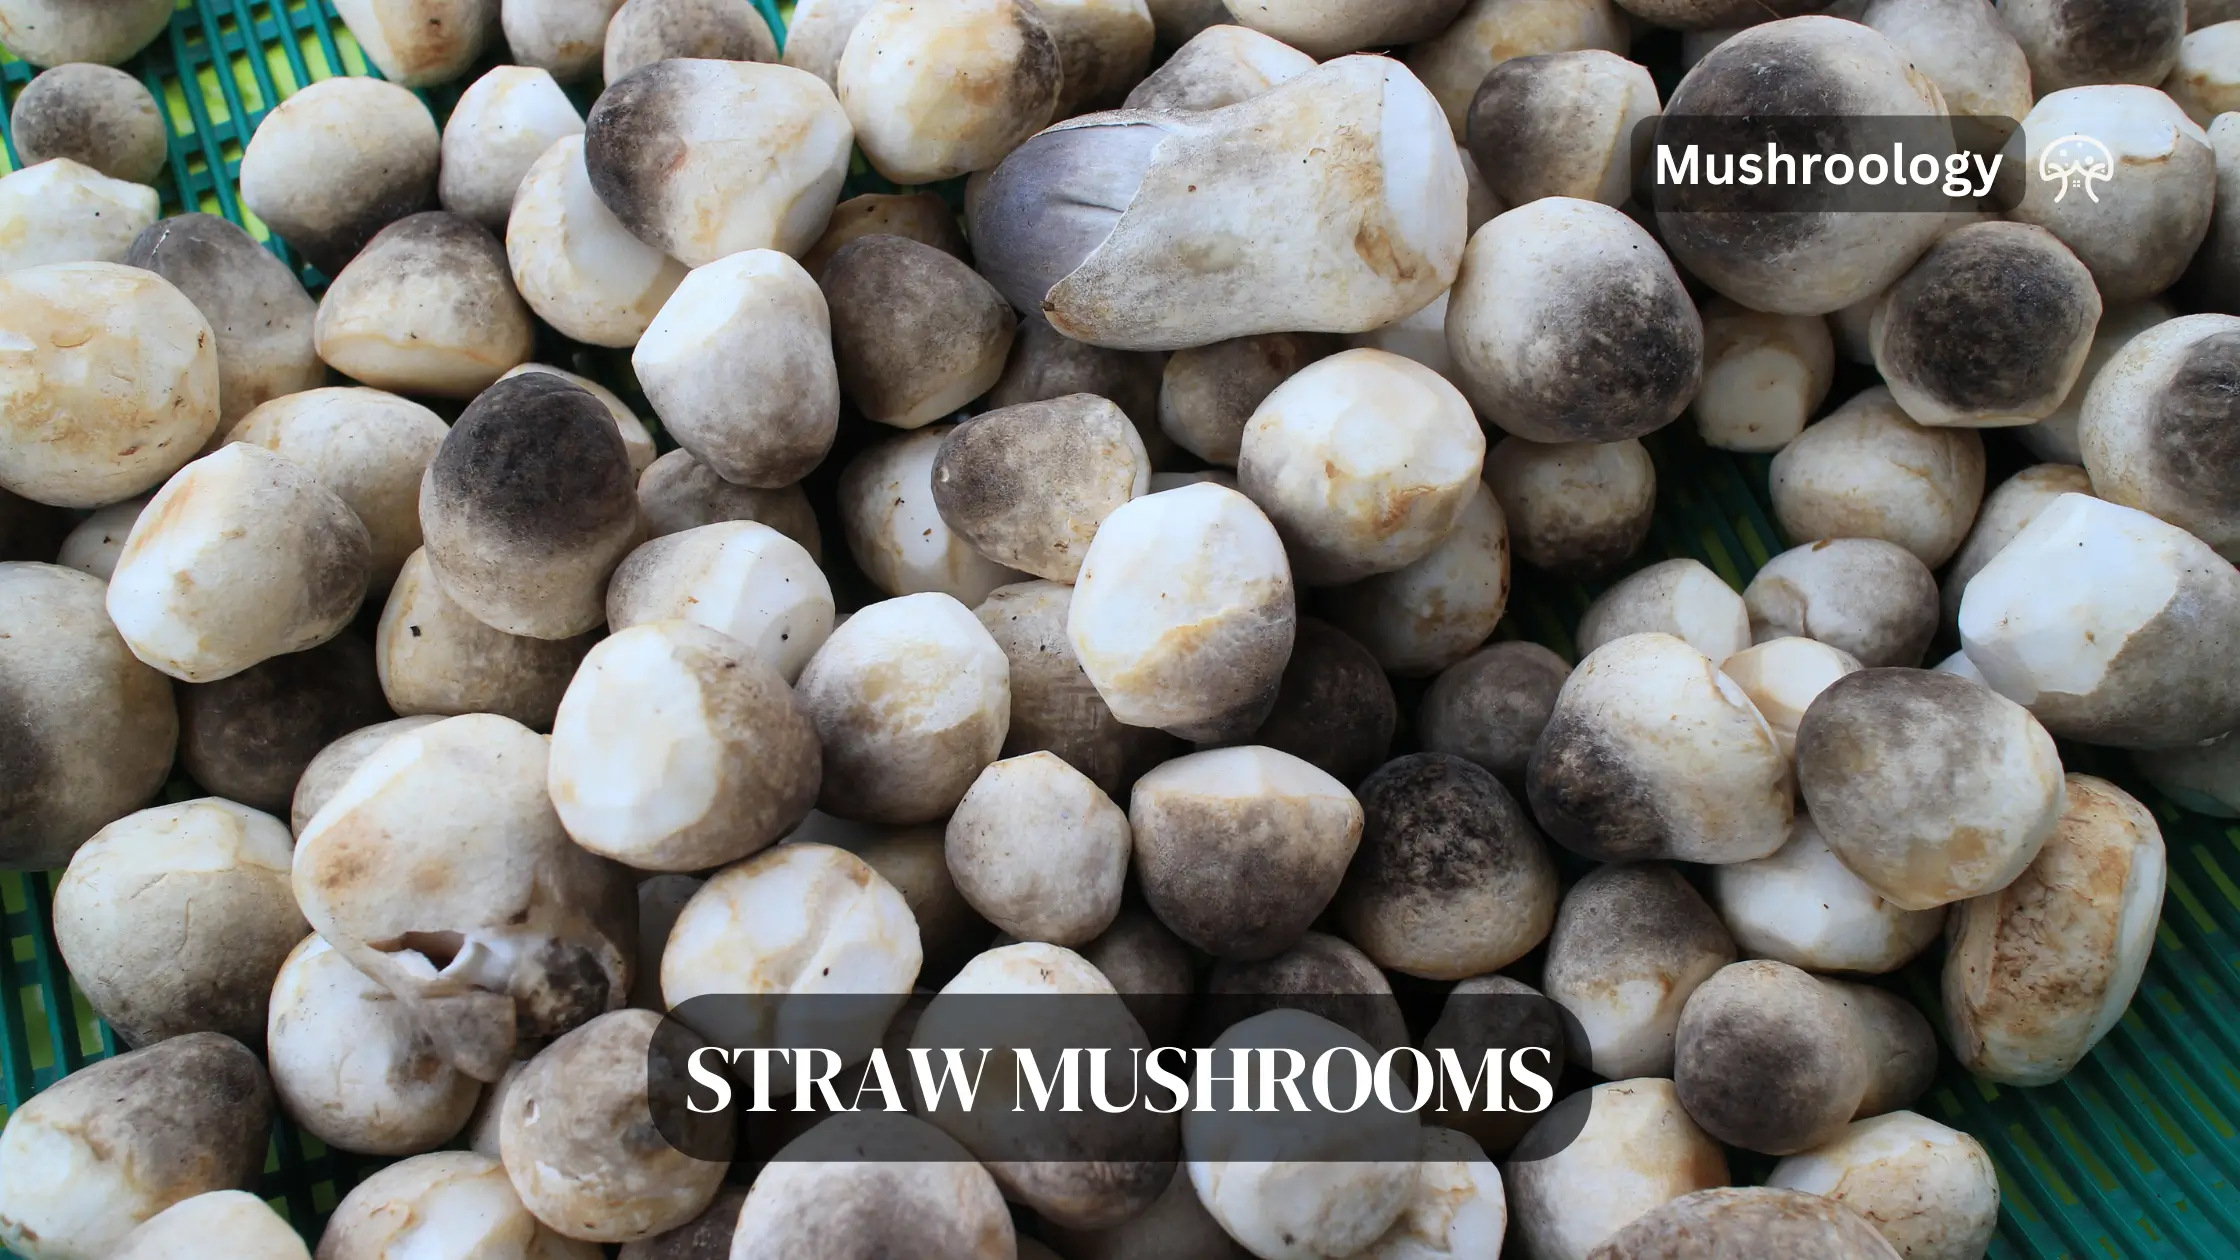 Straw mushrooms